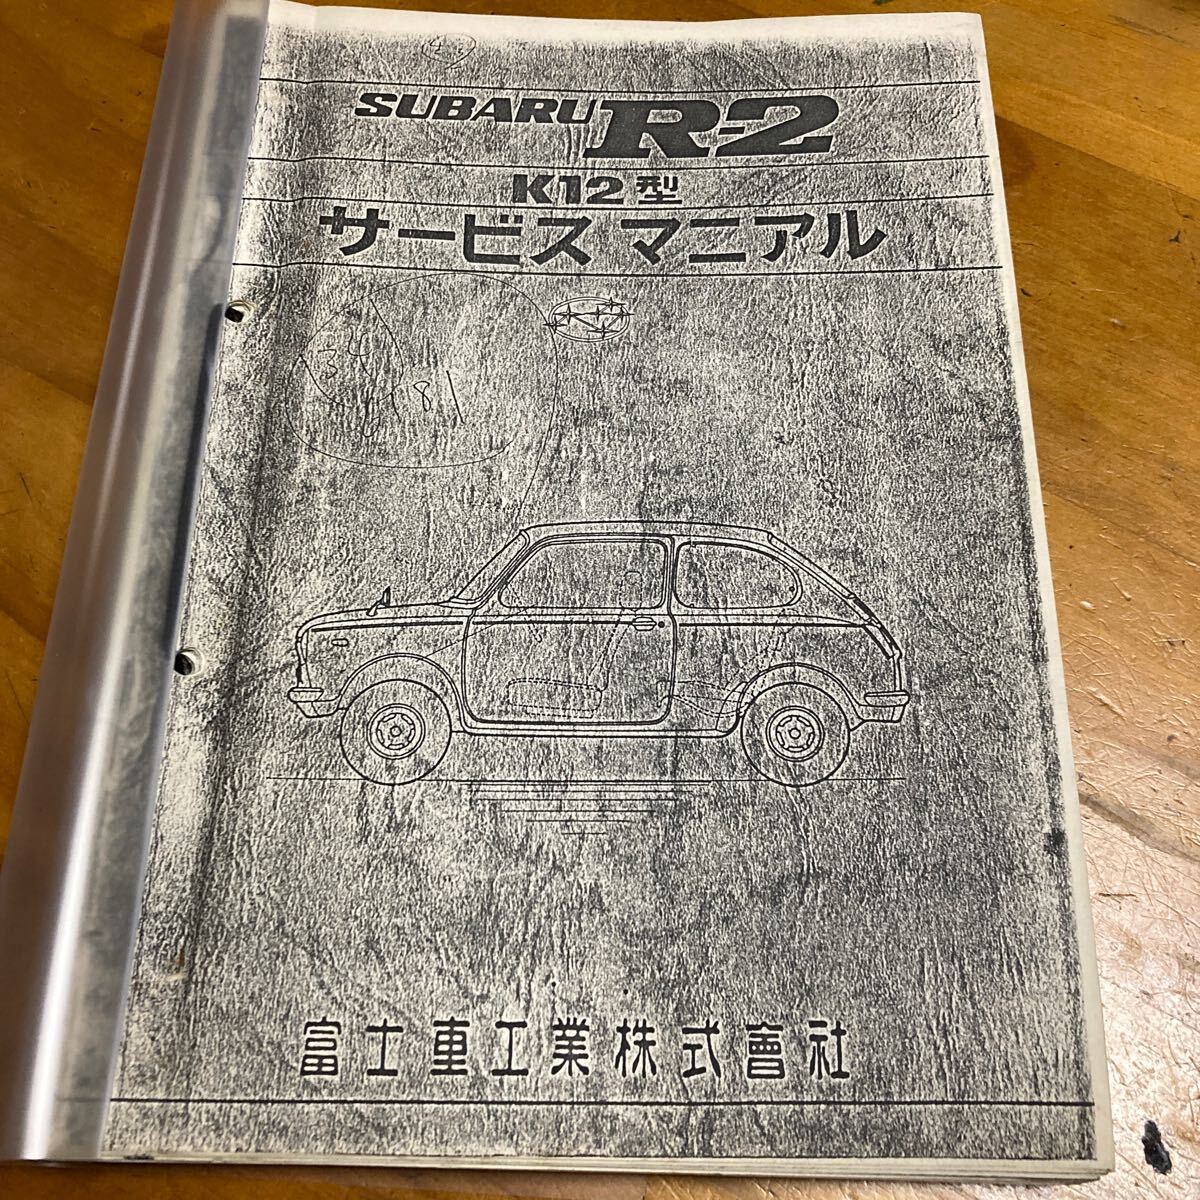  Subaru R2 K12 type maintenance point paper service manual 